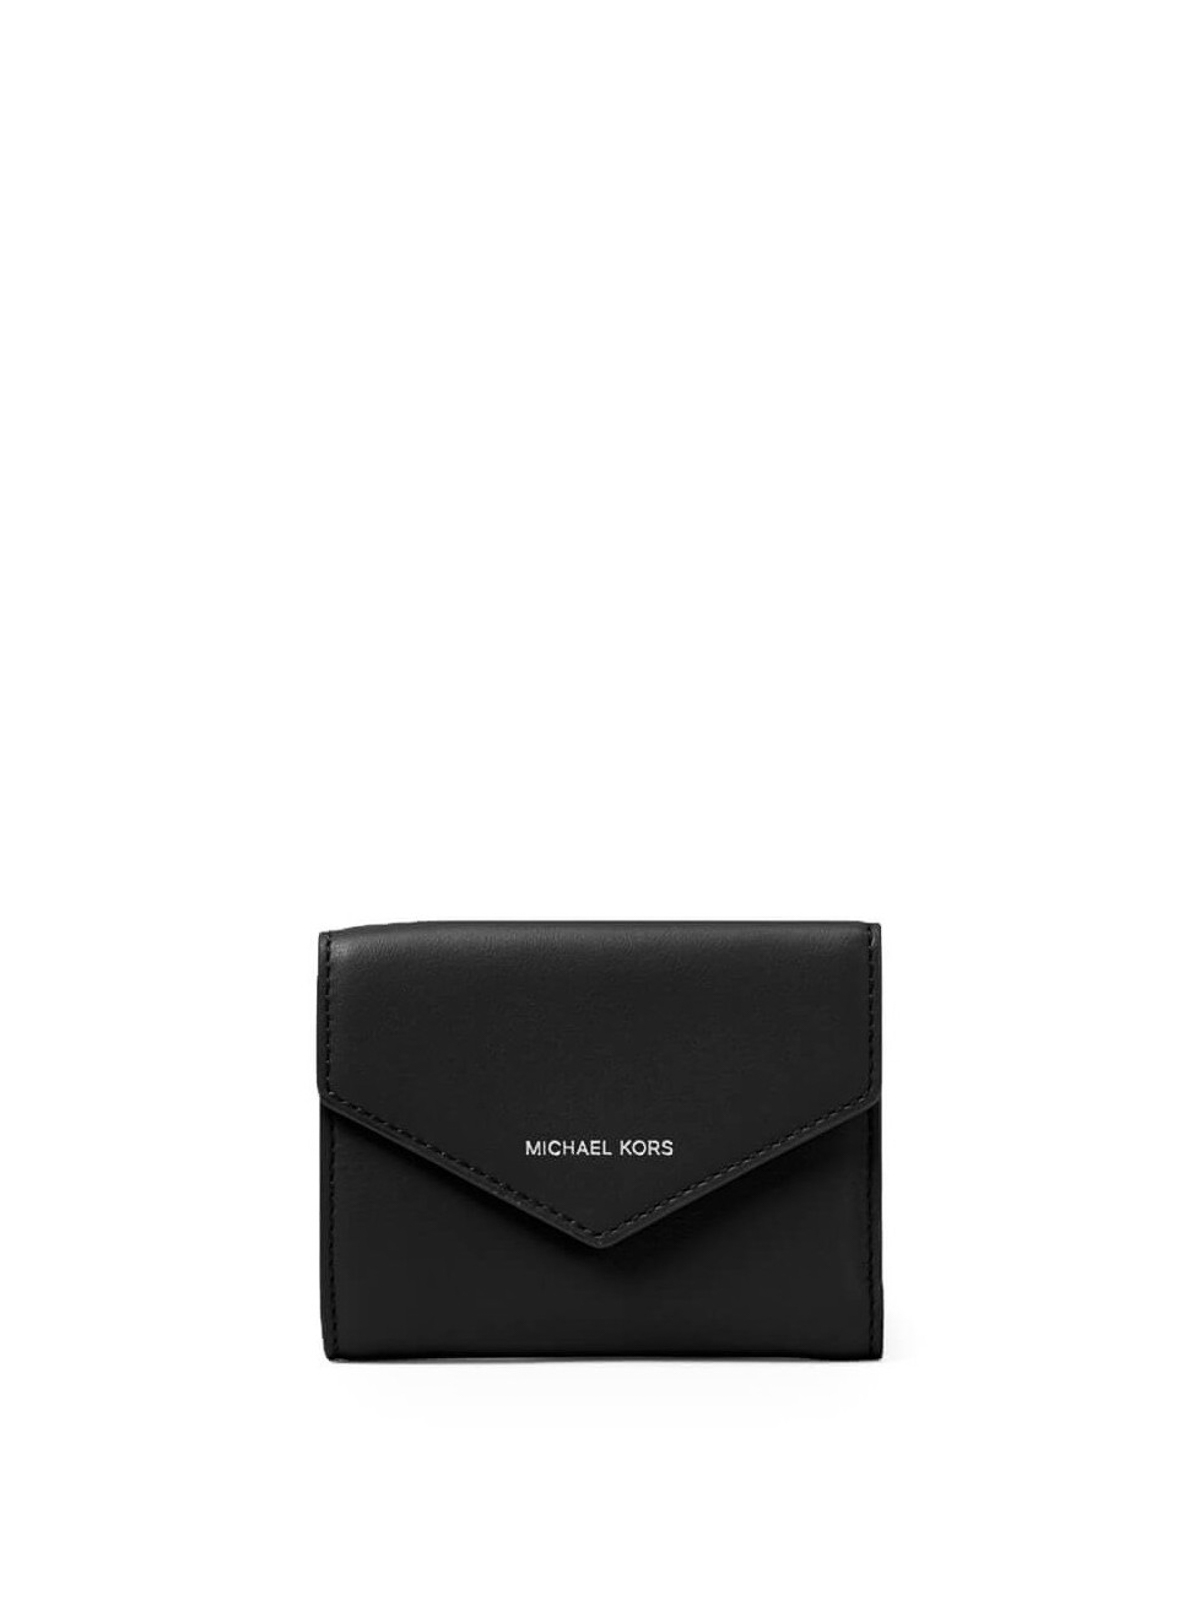 Michael Kors - Blakely leather wallet 